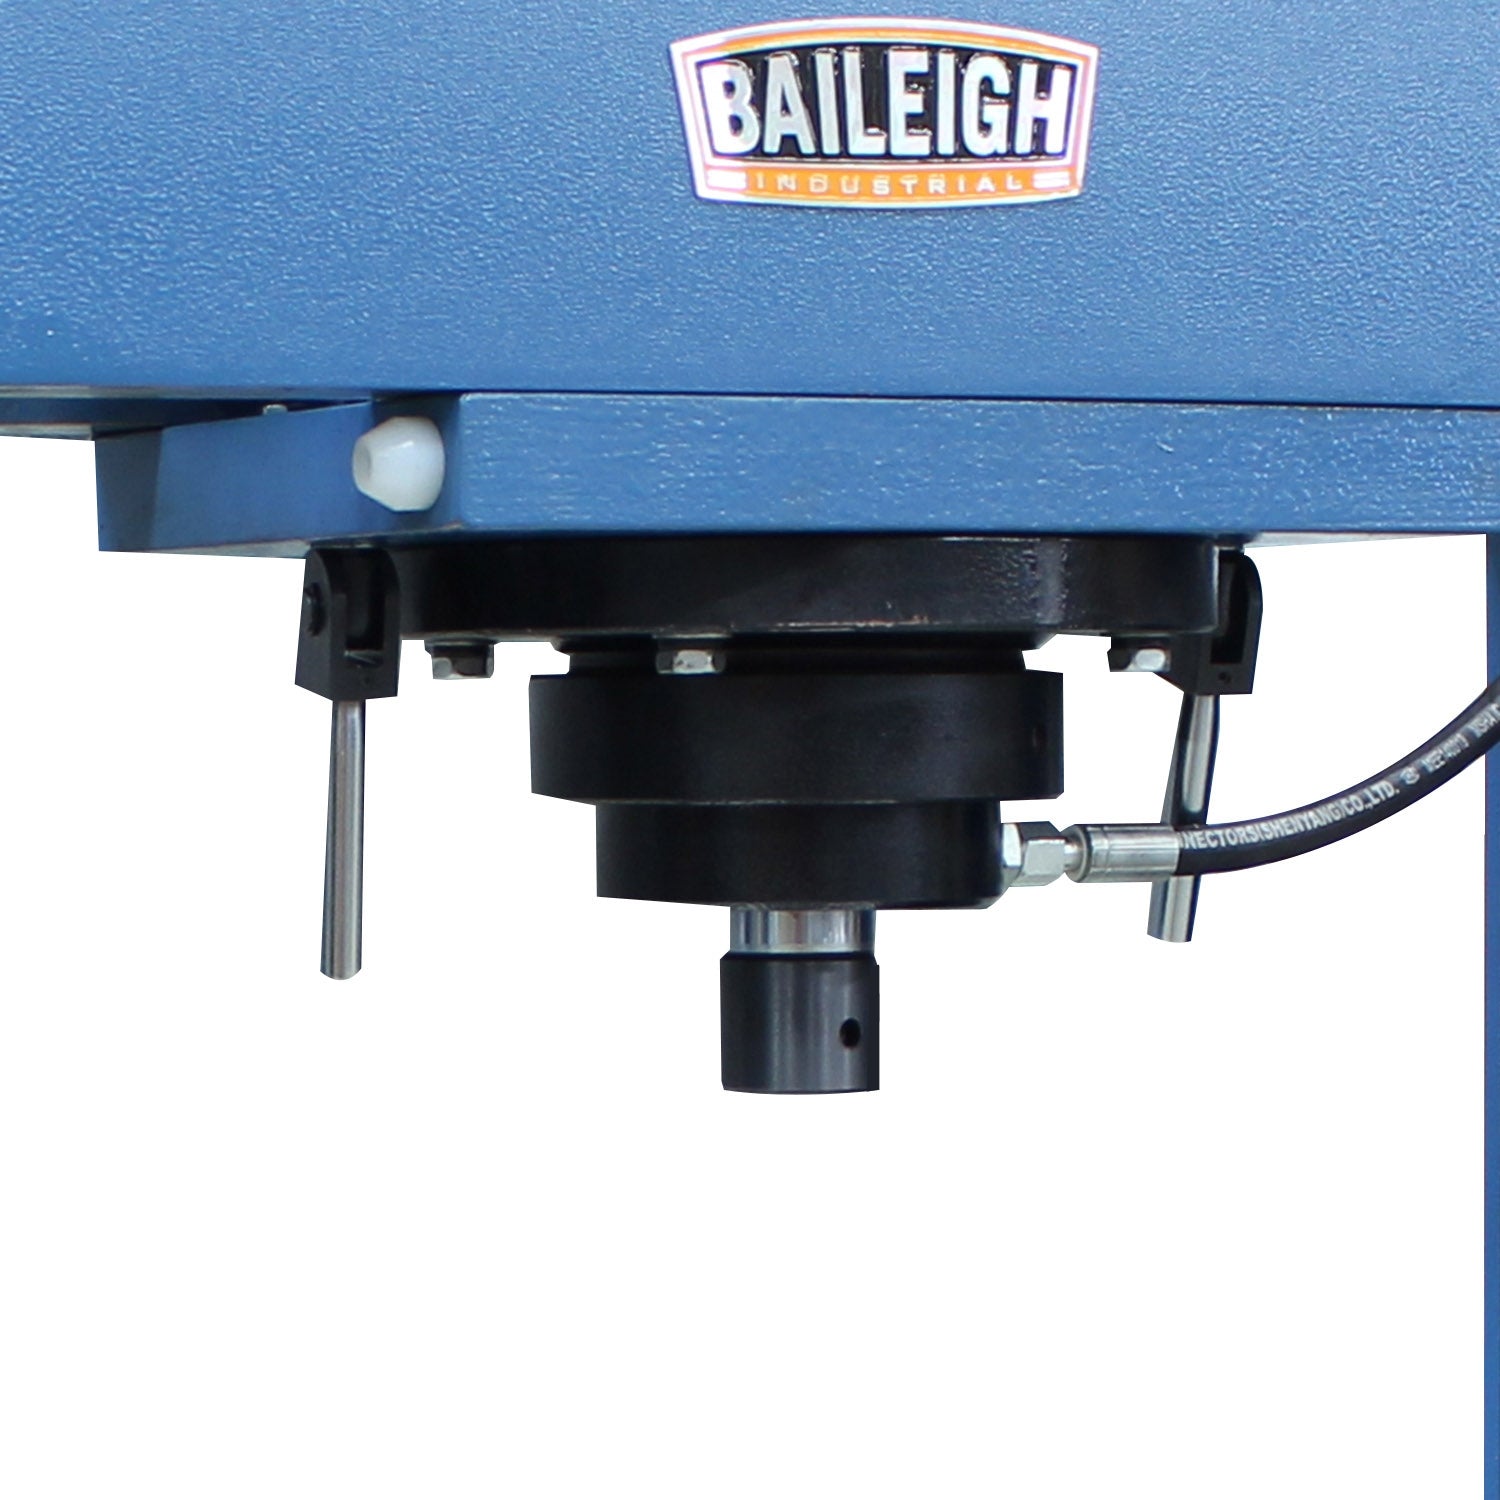 Baileigh HSP-60M-C 220V 3 Phase 60/15 Ton Hydraulic H-Frame Press, 11.5" Stroke